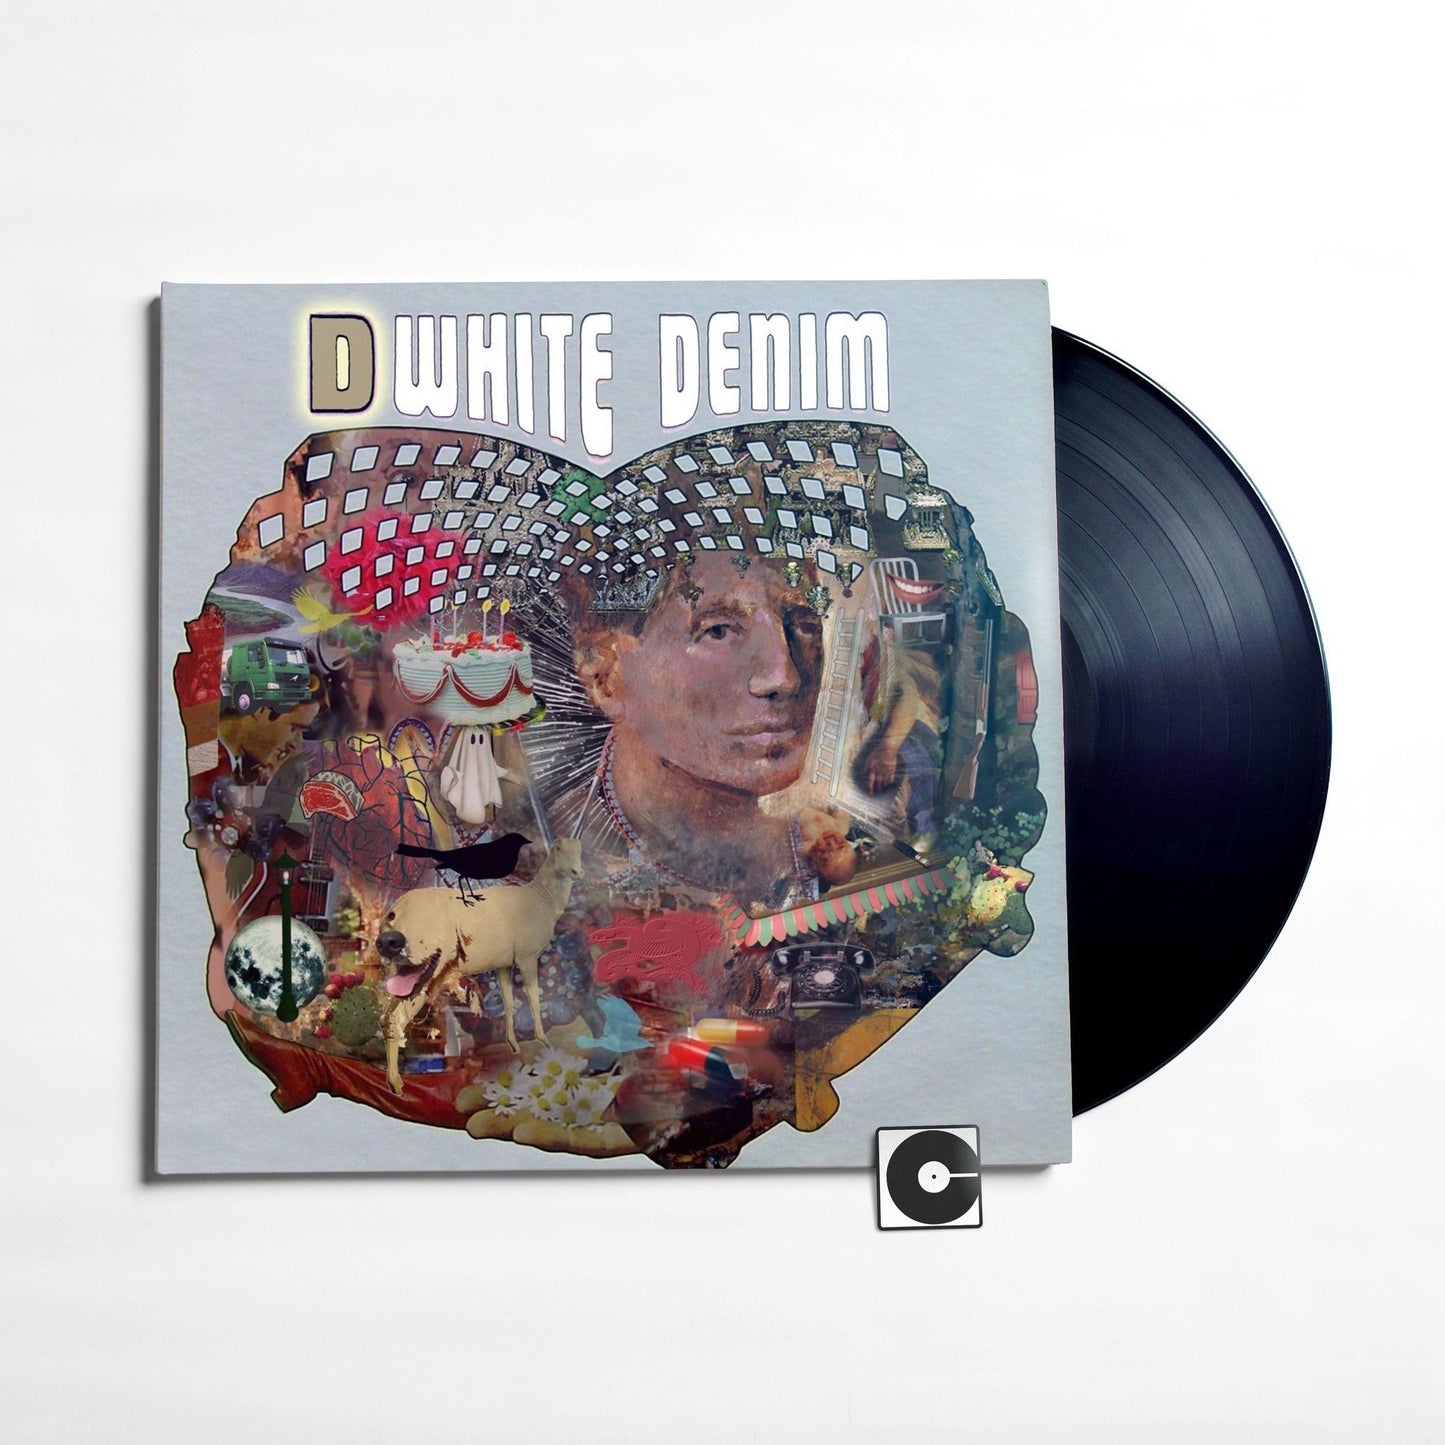 White Denim - "D"